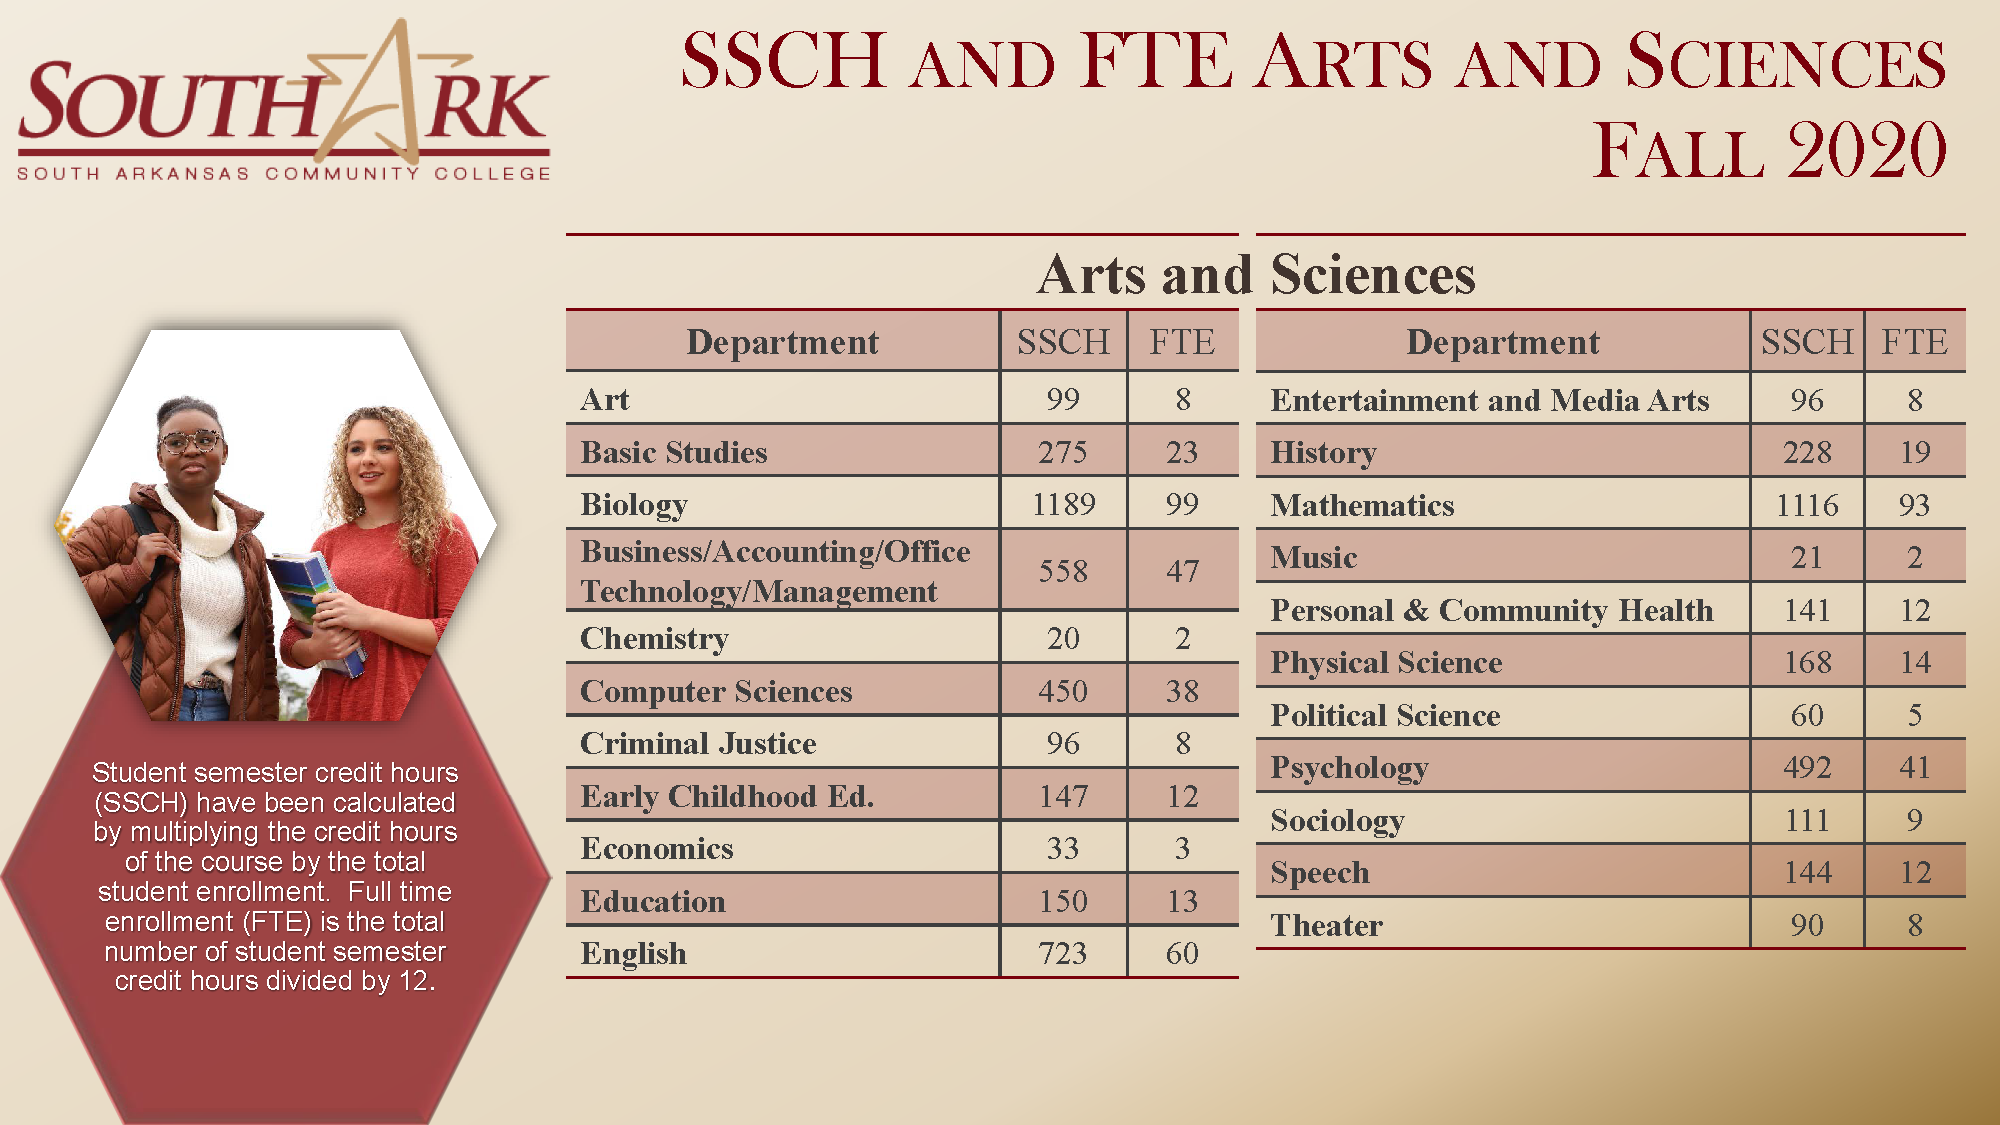 SSCH FTE for ArtsSciences Fall 2020